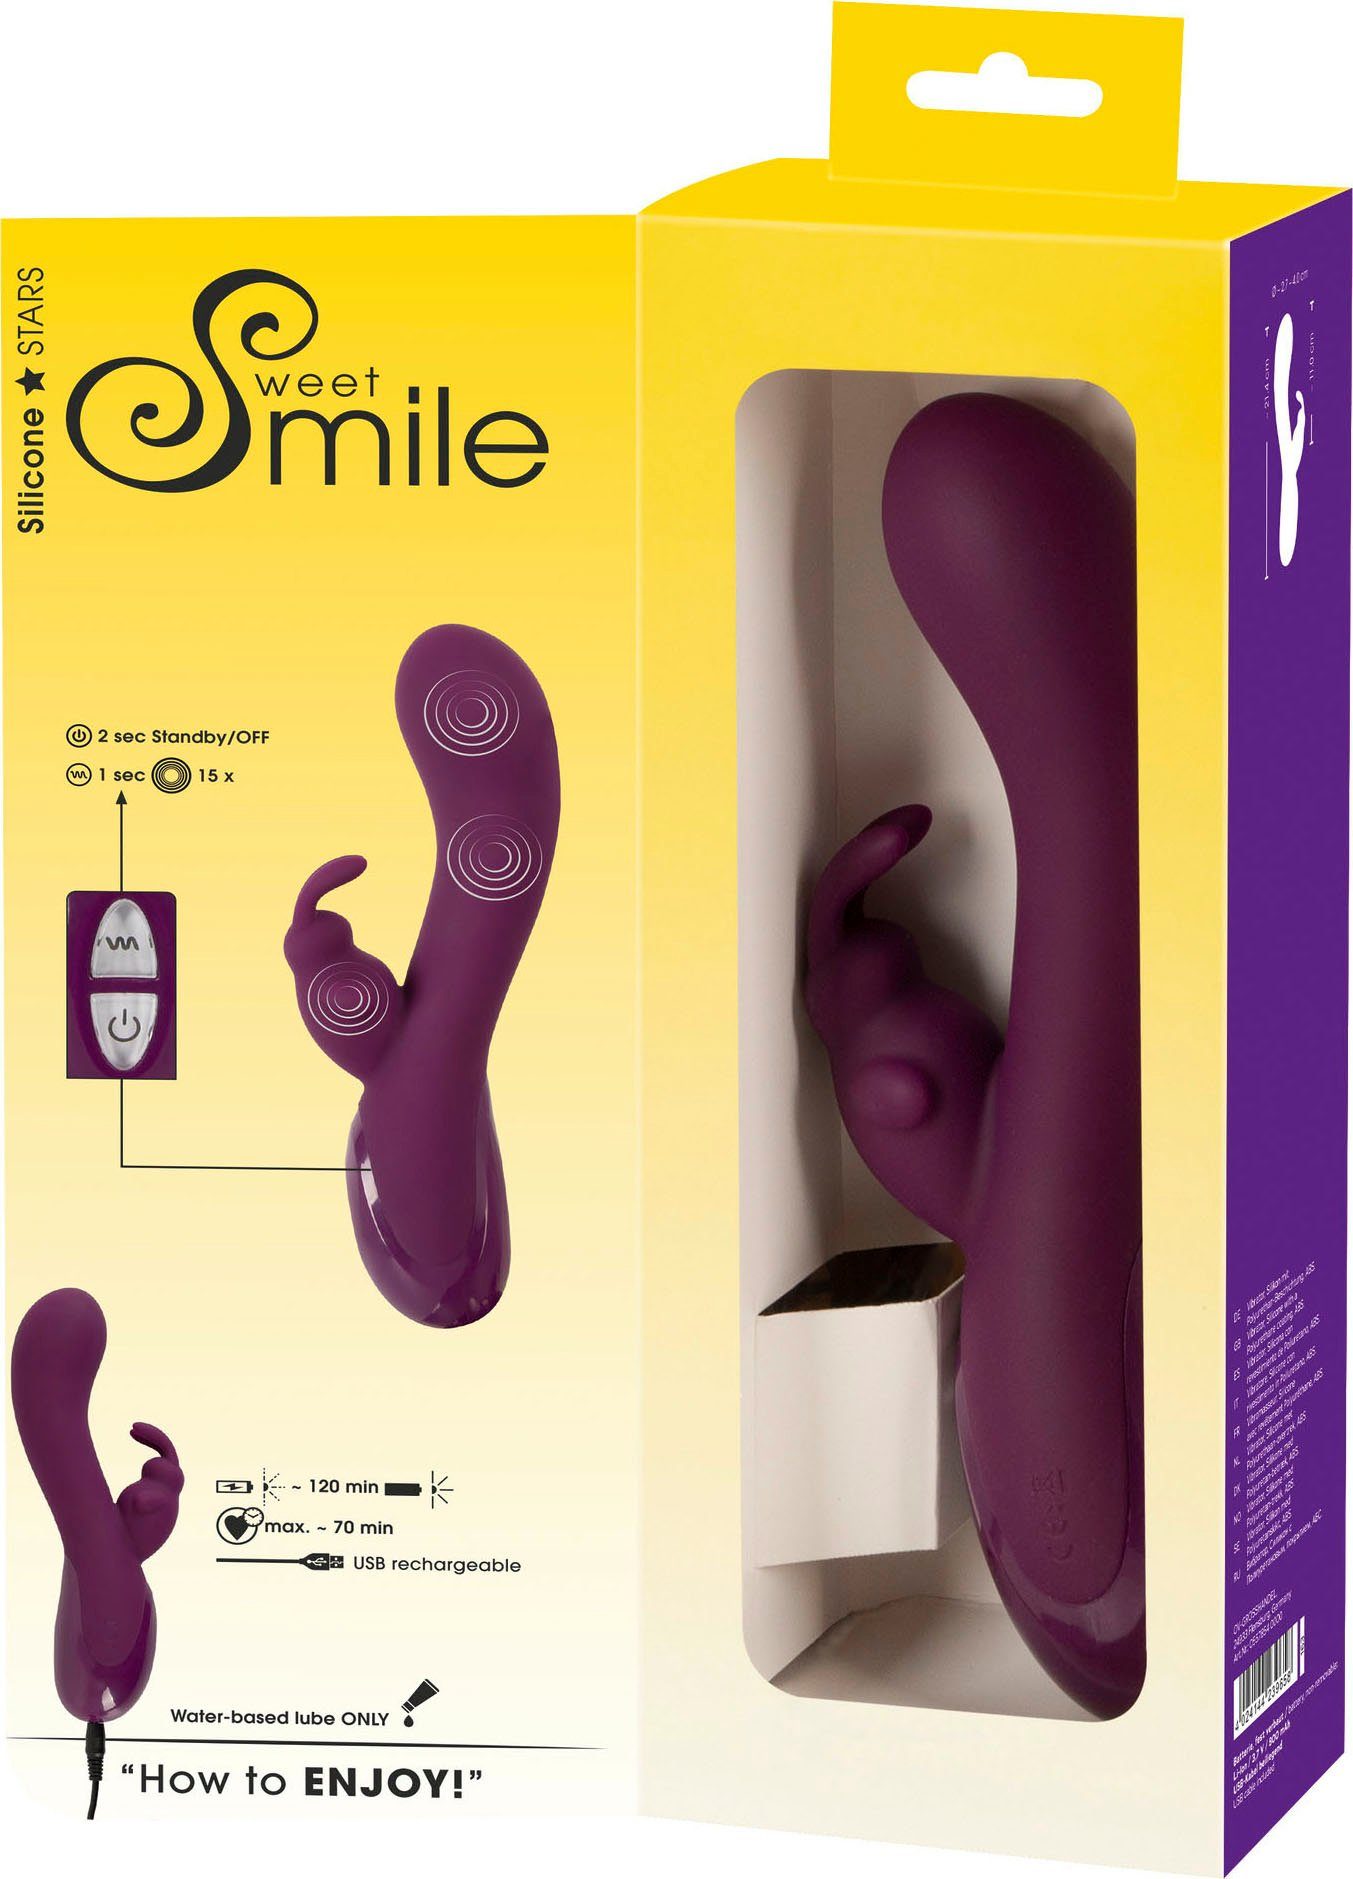 Sweet Smile Smile Rabbit-Vibrator